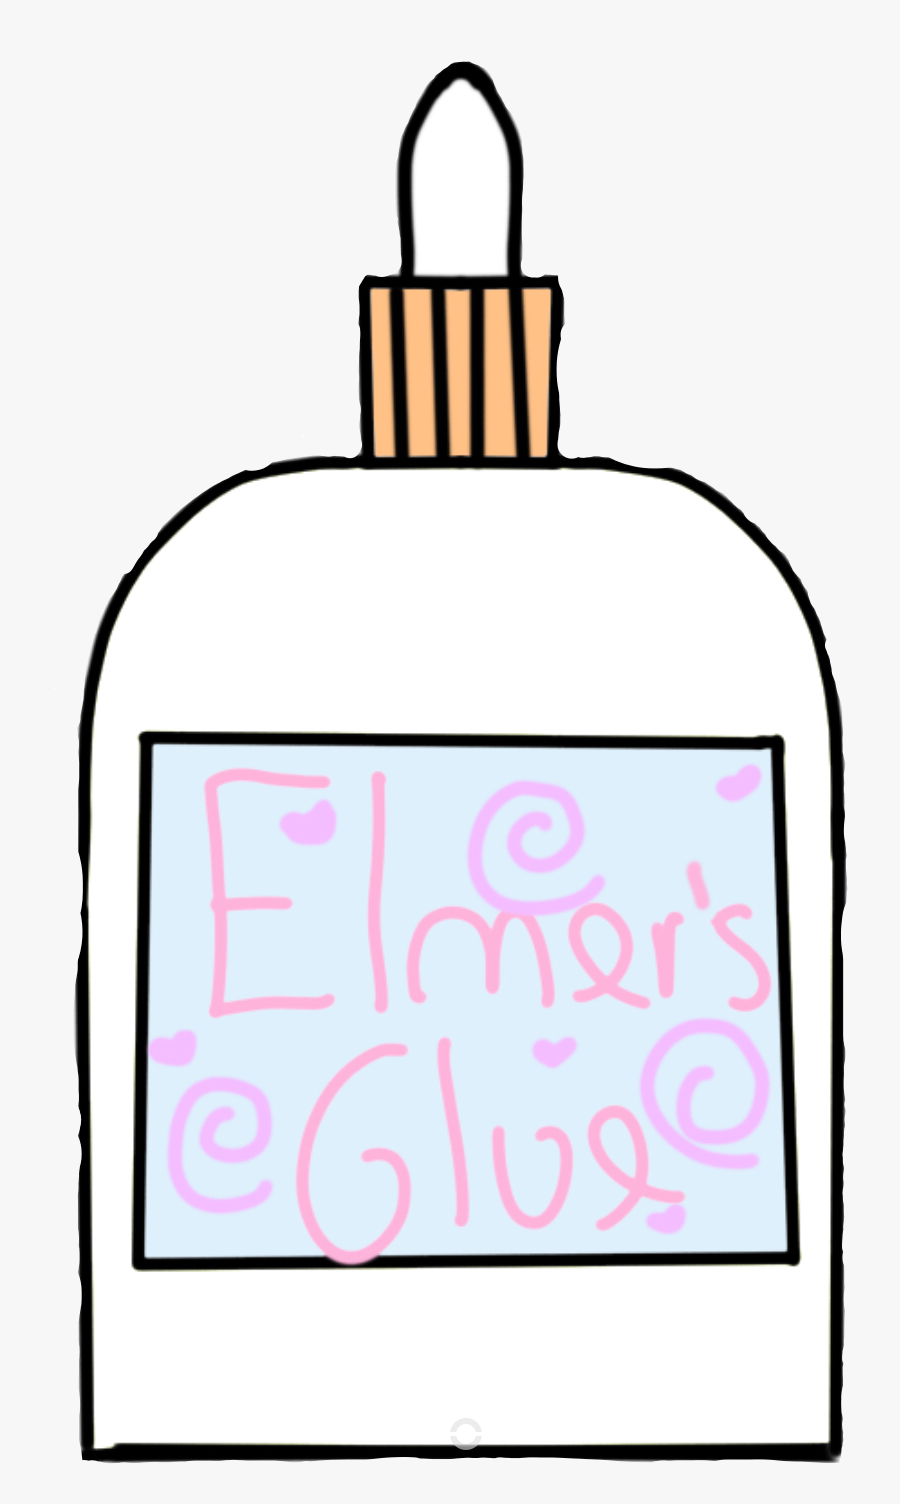 #elmers #glue #slime #cool #colorful #interesting #freetoedit, Transparent Clipart